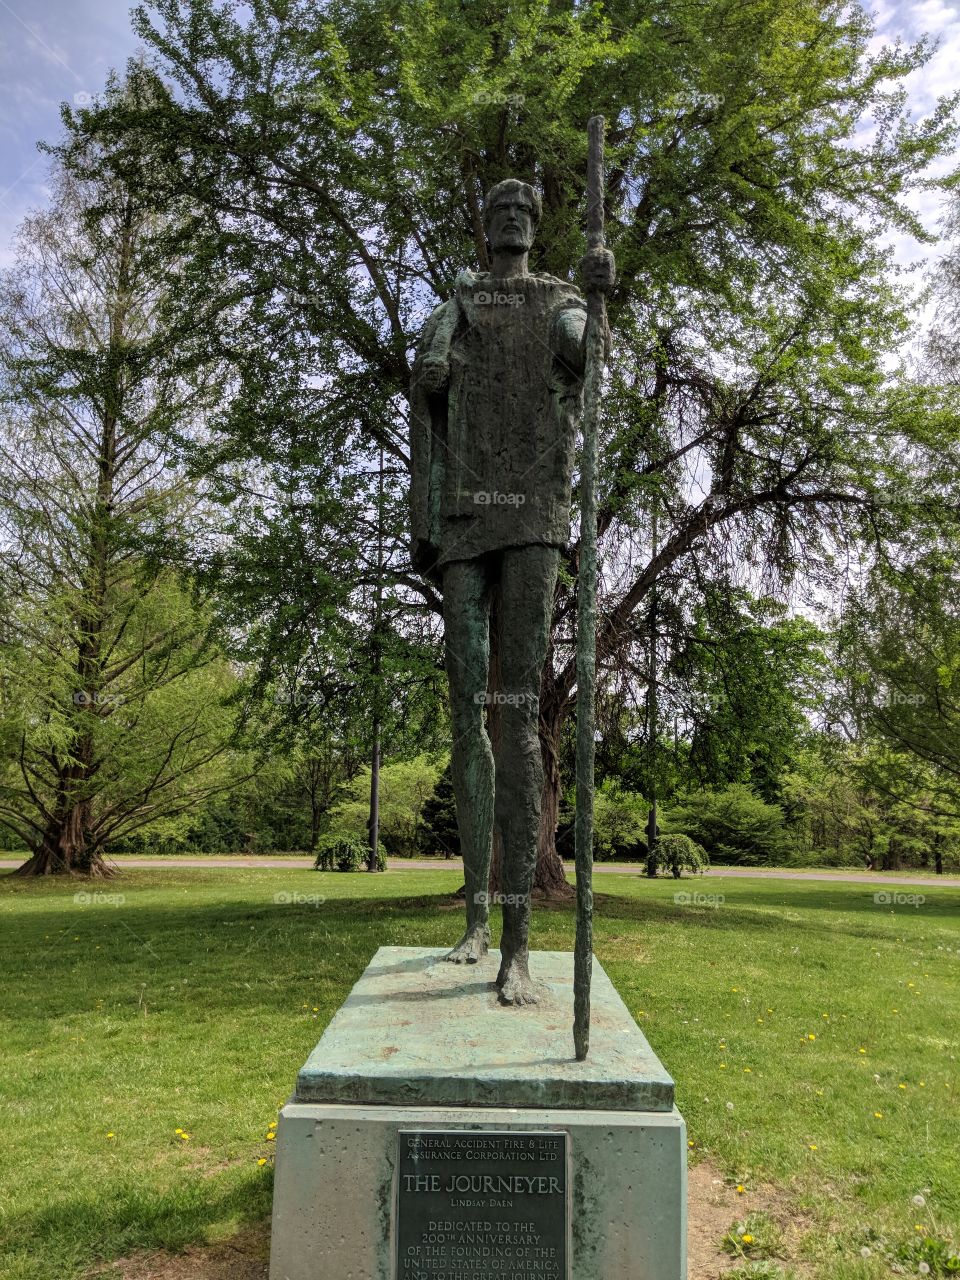 Journeyman statue in a green garden setting.